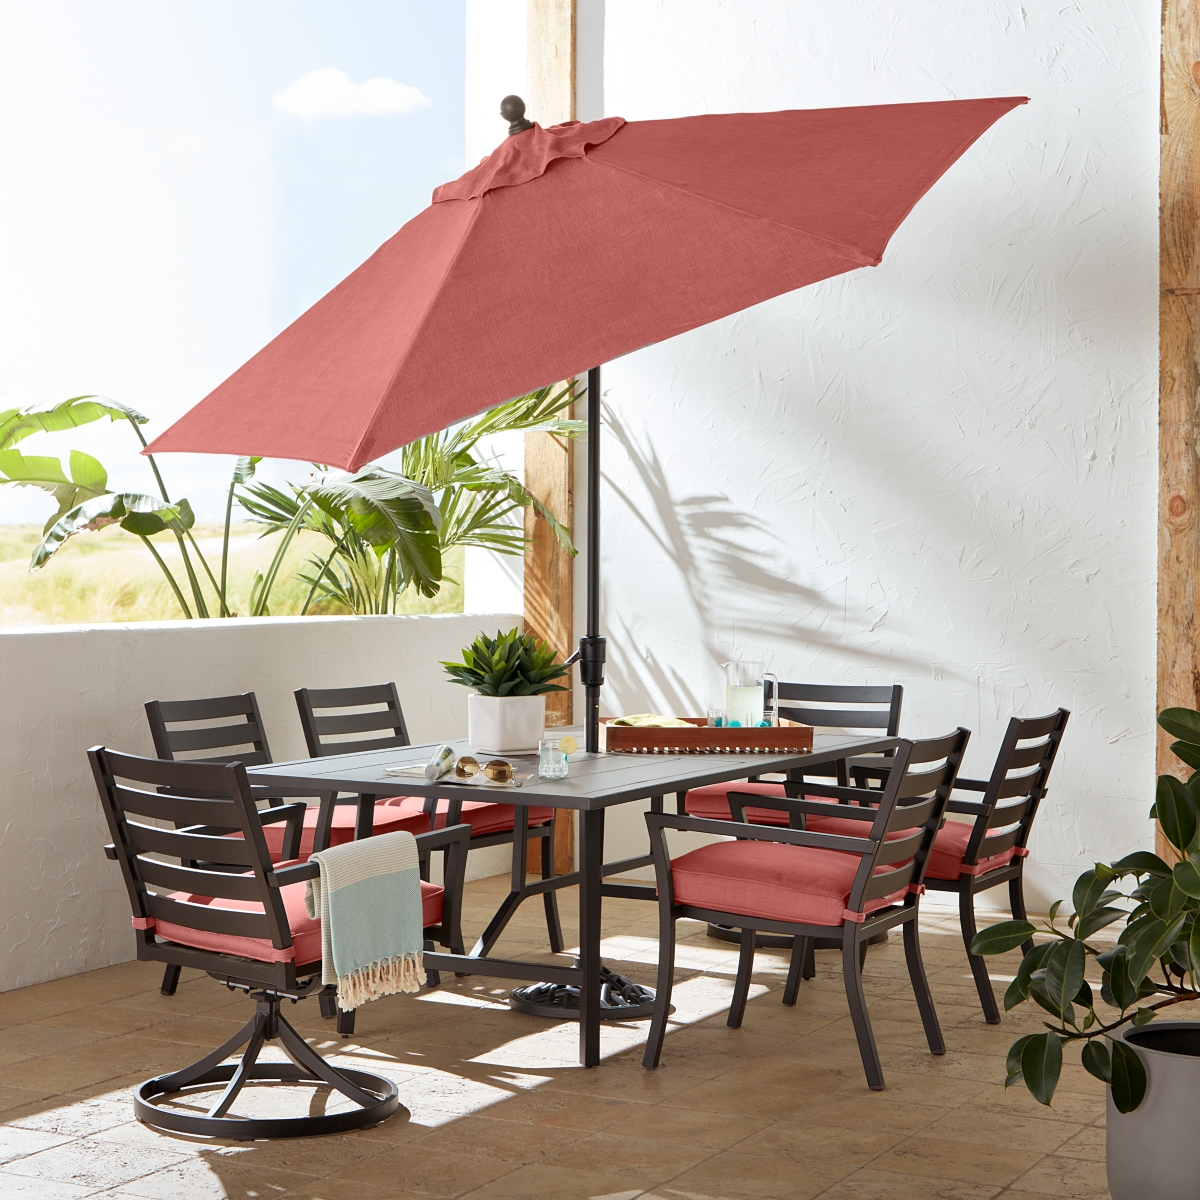 Shop Agio Astaire Outdoor 9' Umbrella + Umbrella Base In Spa Light Blue